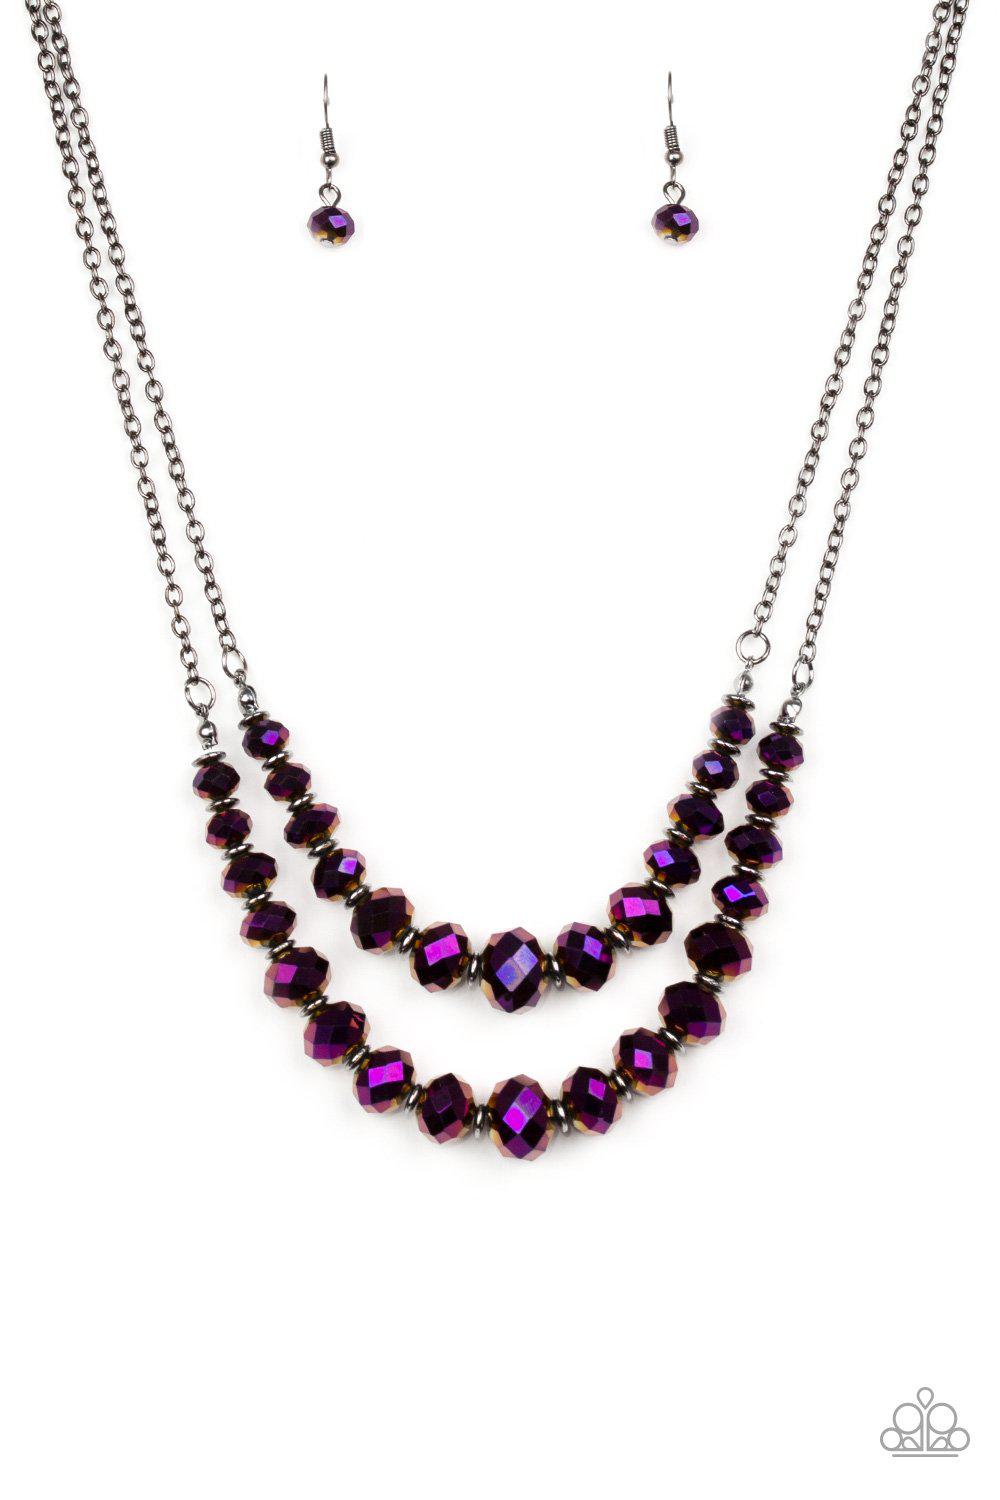 Strikingly Spellbinding Purple Necklace - Paparazzi Accessories-CarasShop.com - $5 Jewelry by Cara Jewels